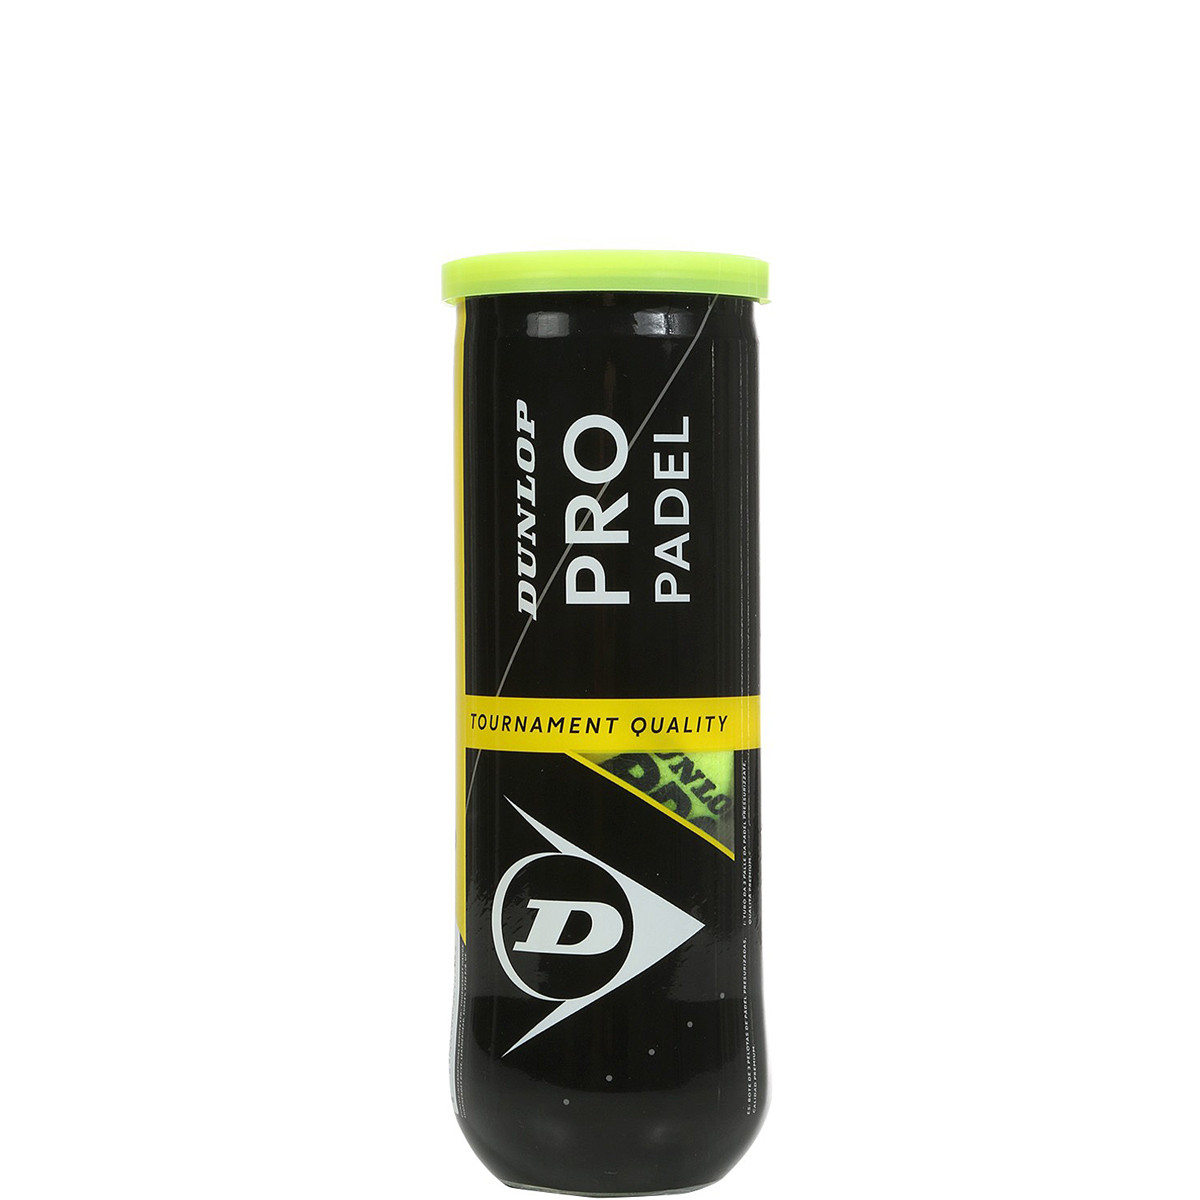 CAN OF 3 DUNLOP PRO PADEL BALLS - DUNLOP - Balls - Padel | Tennispro